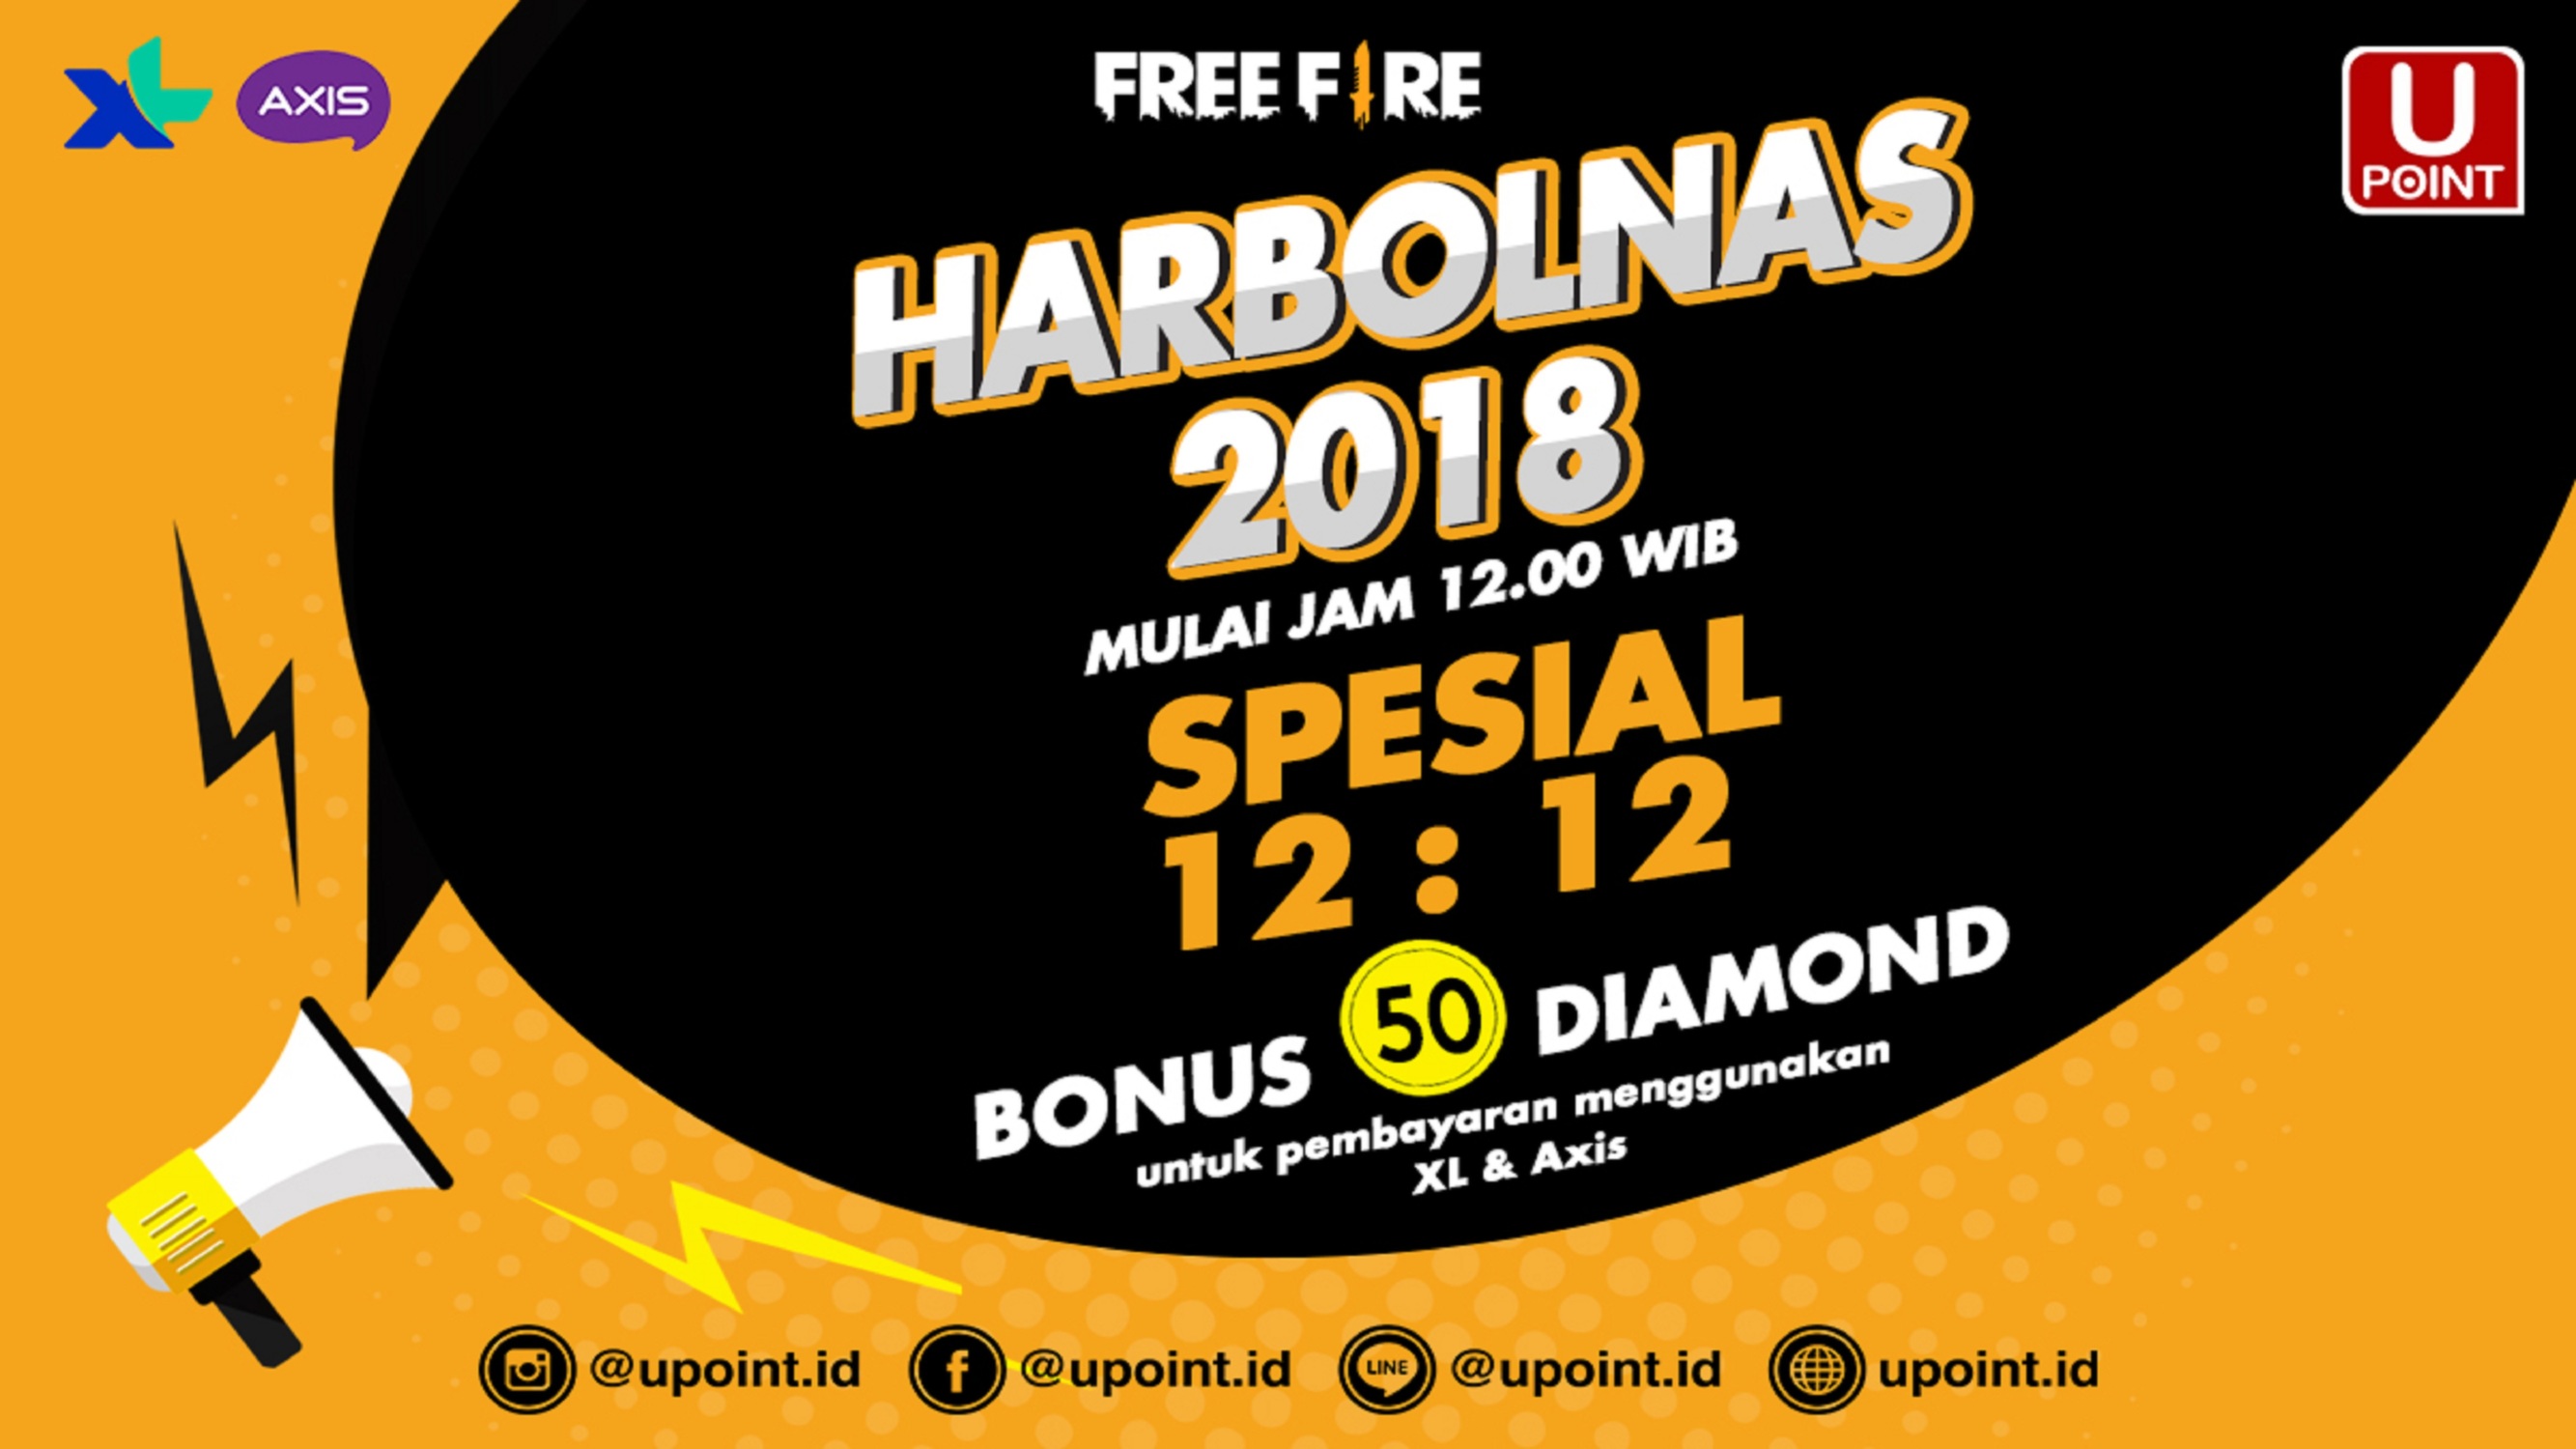 [Promo] SPESIAL HARBOLNAS Free Fire 12.12